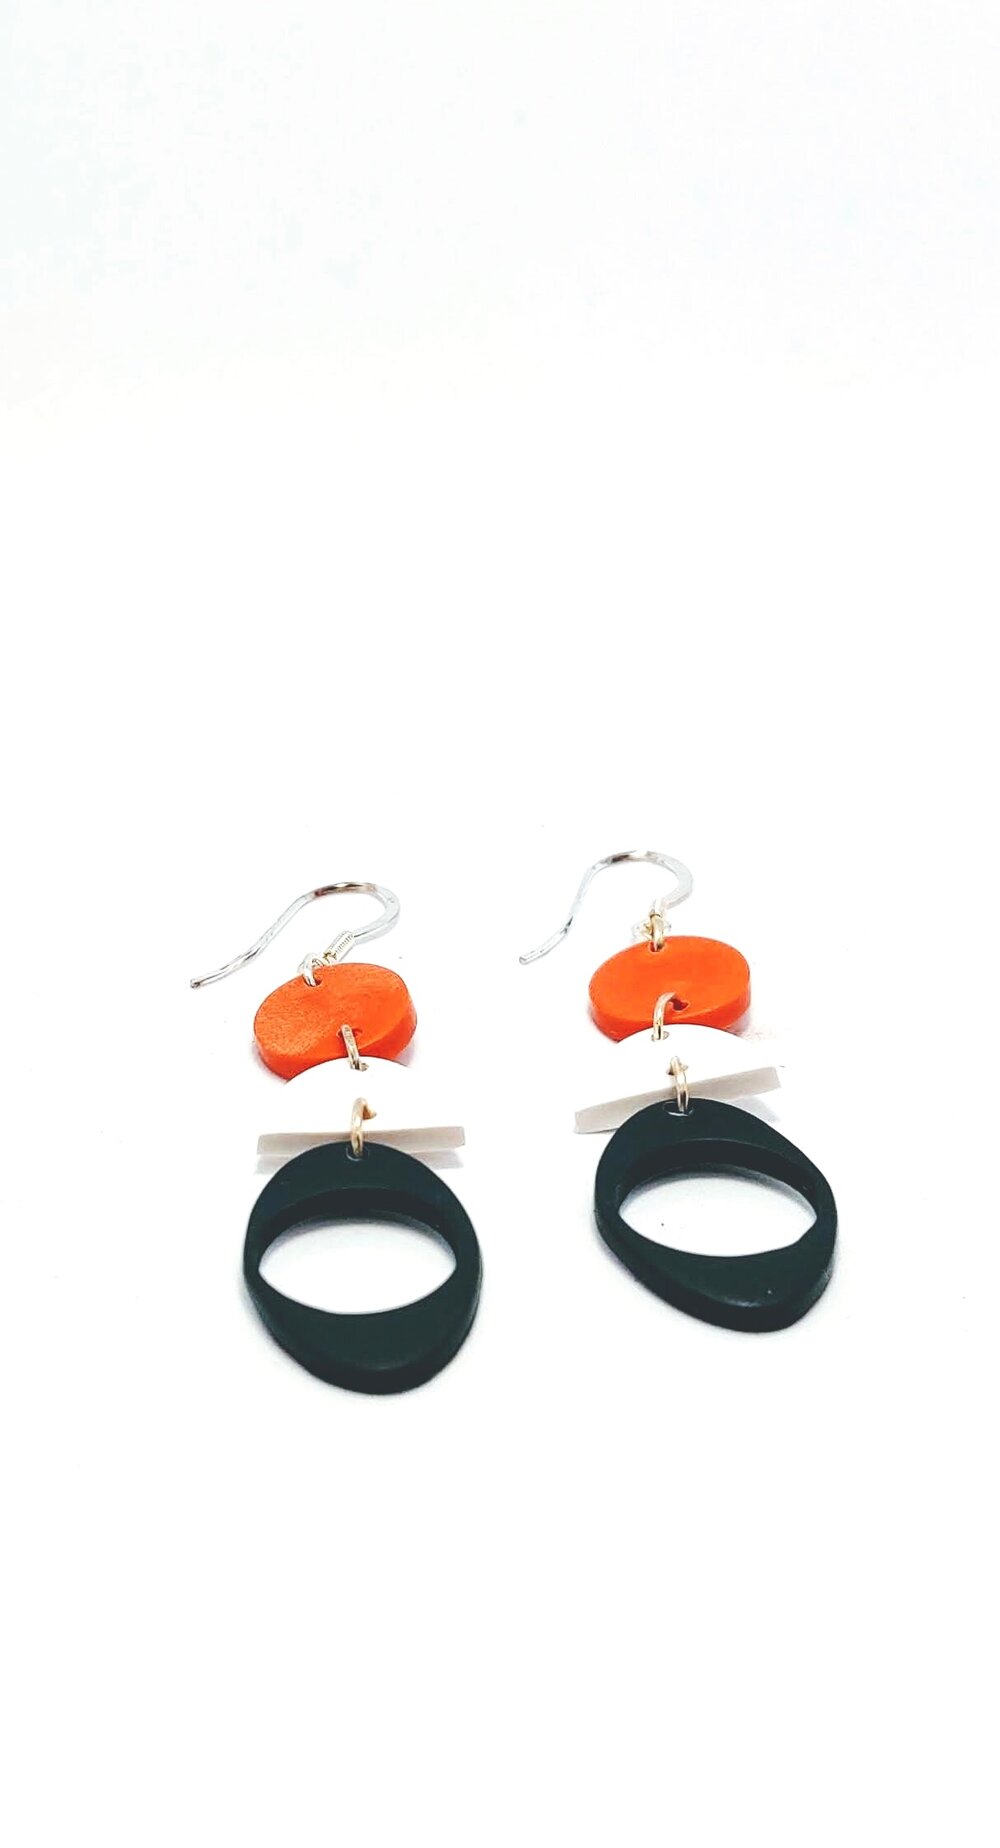 Dangle earrings in Navy Blue, white and orange geometric shapes